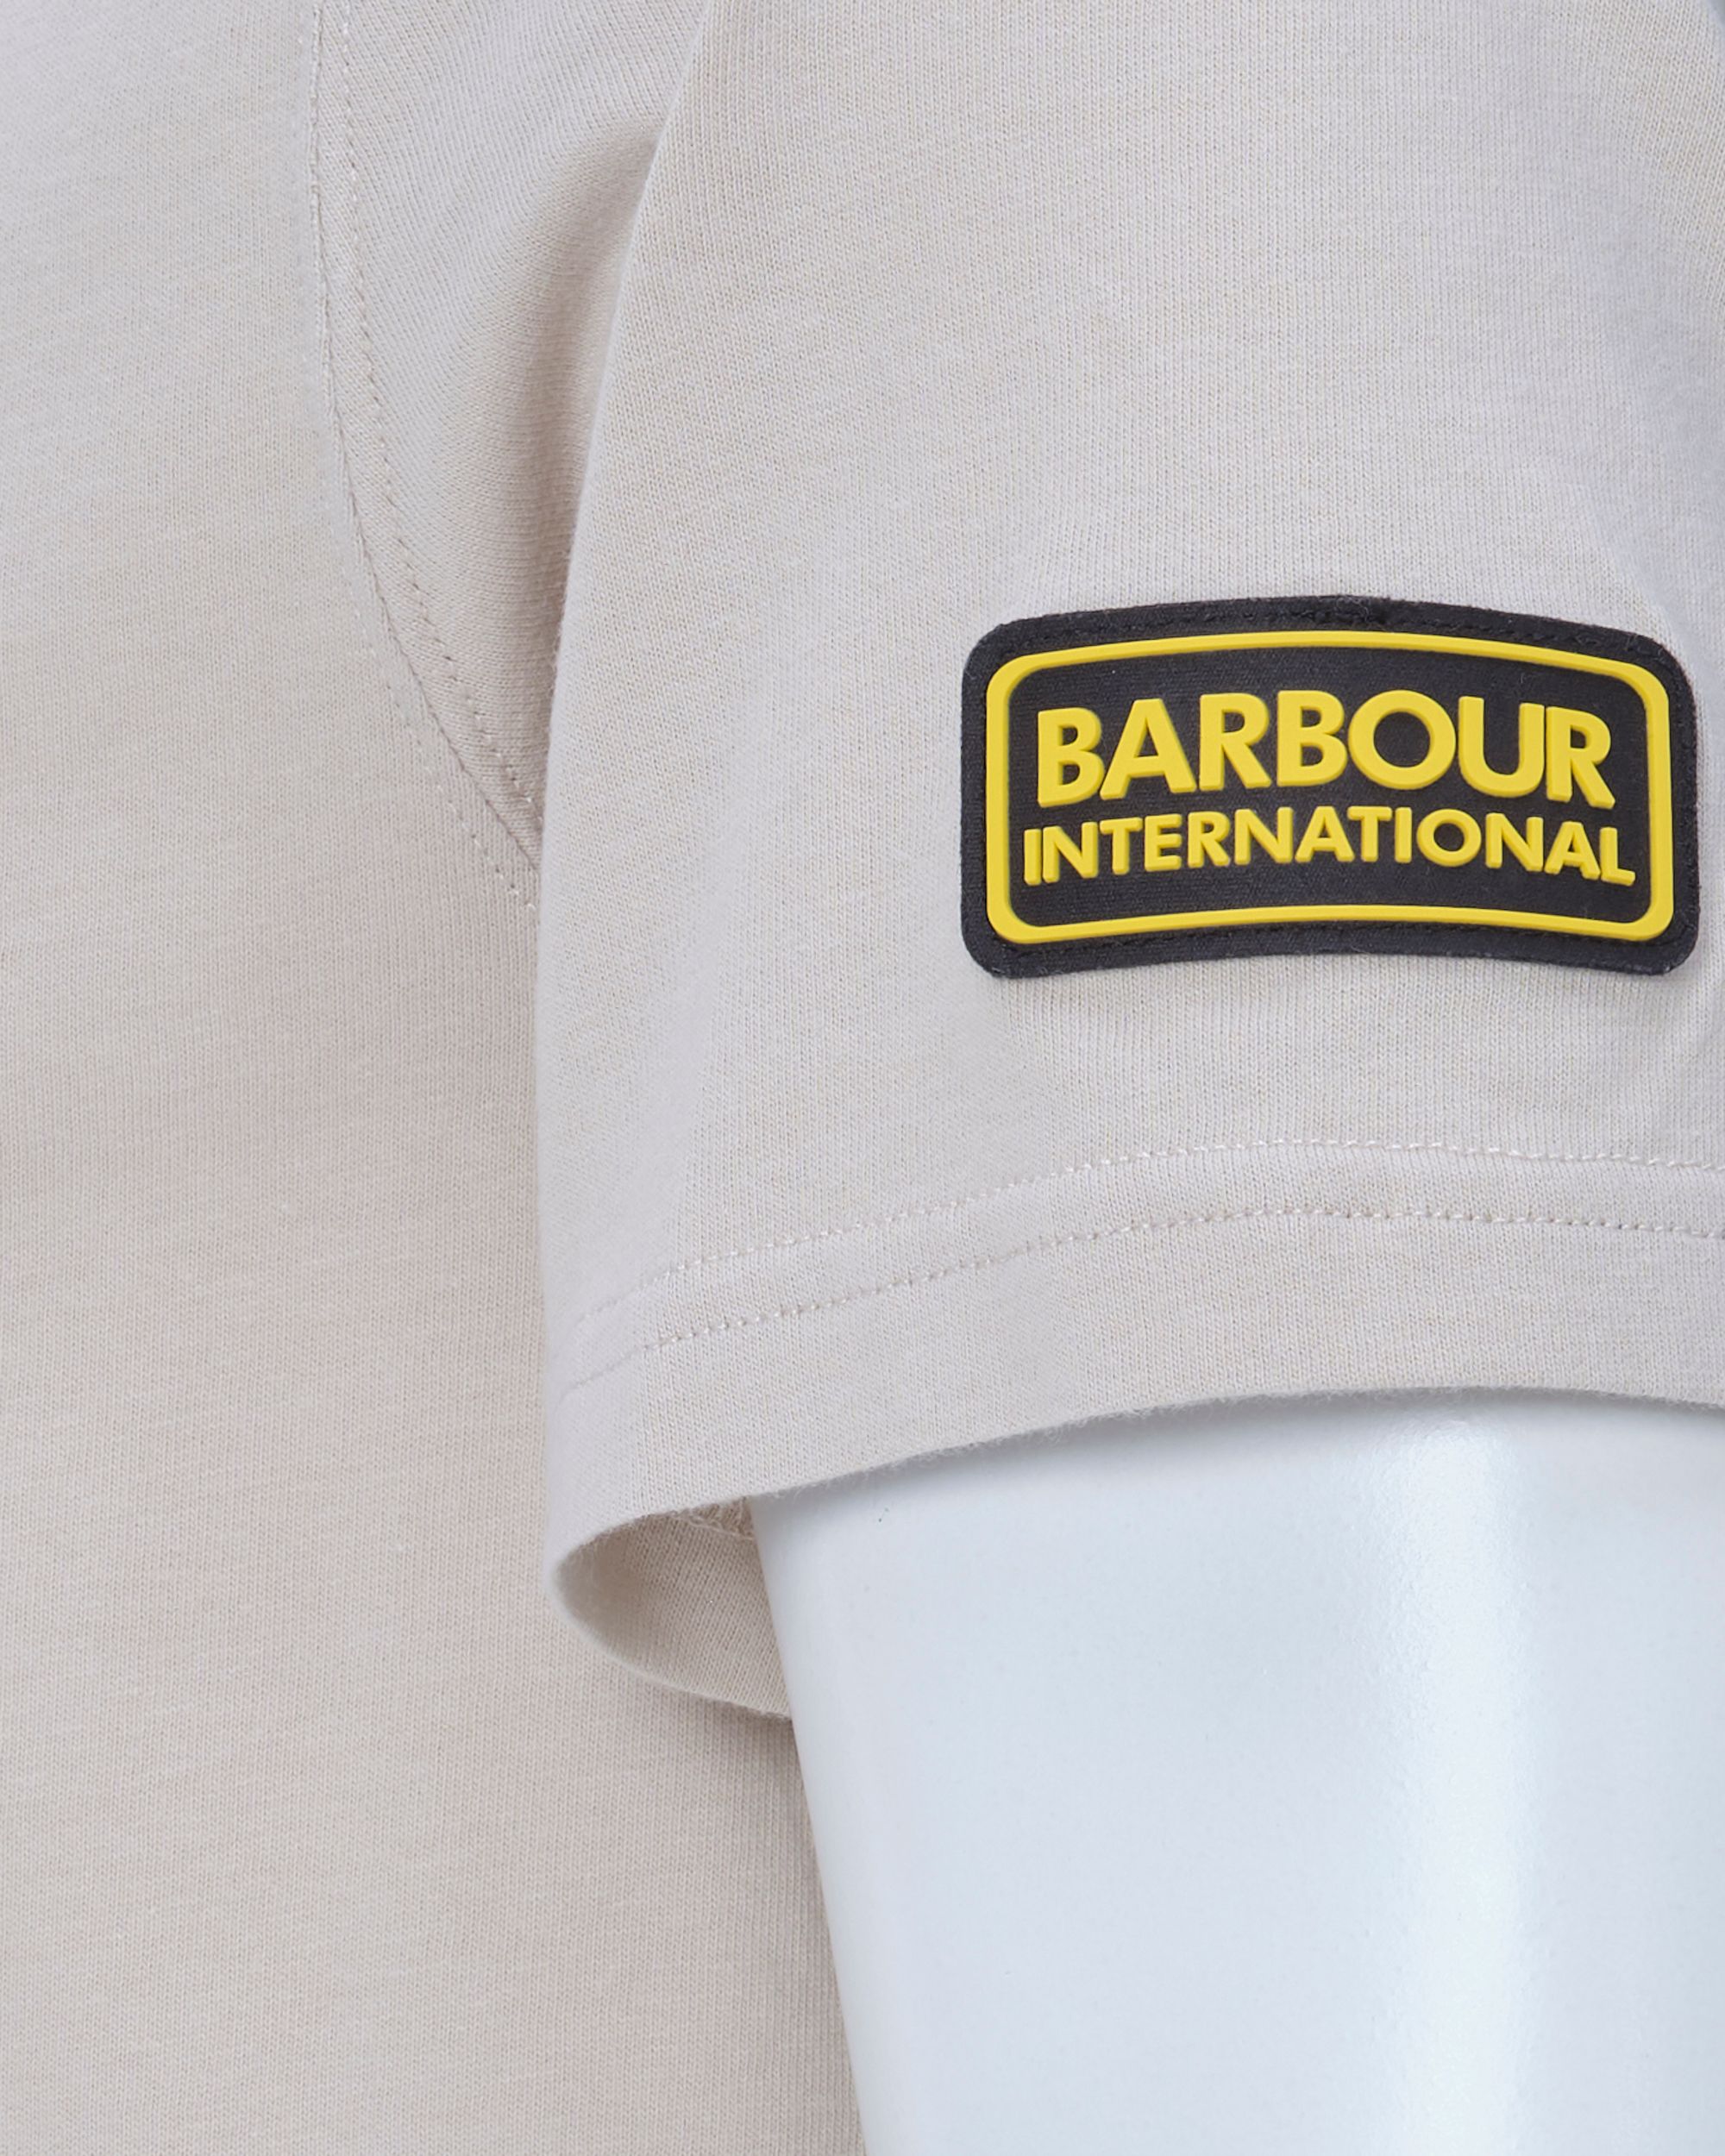 Barbour International Devise Tee T-shirt KM Grijs 078665-001-L